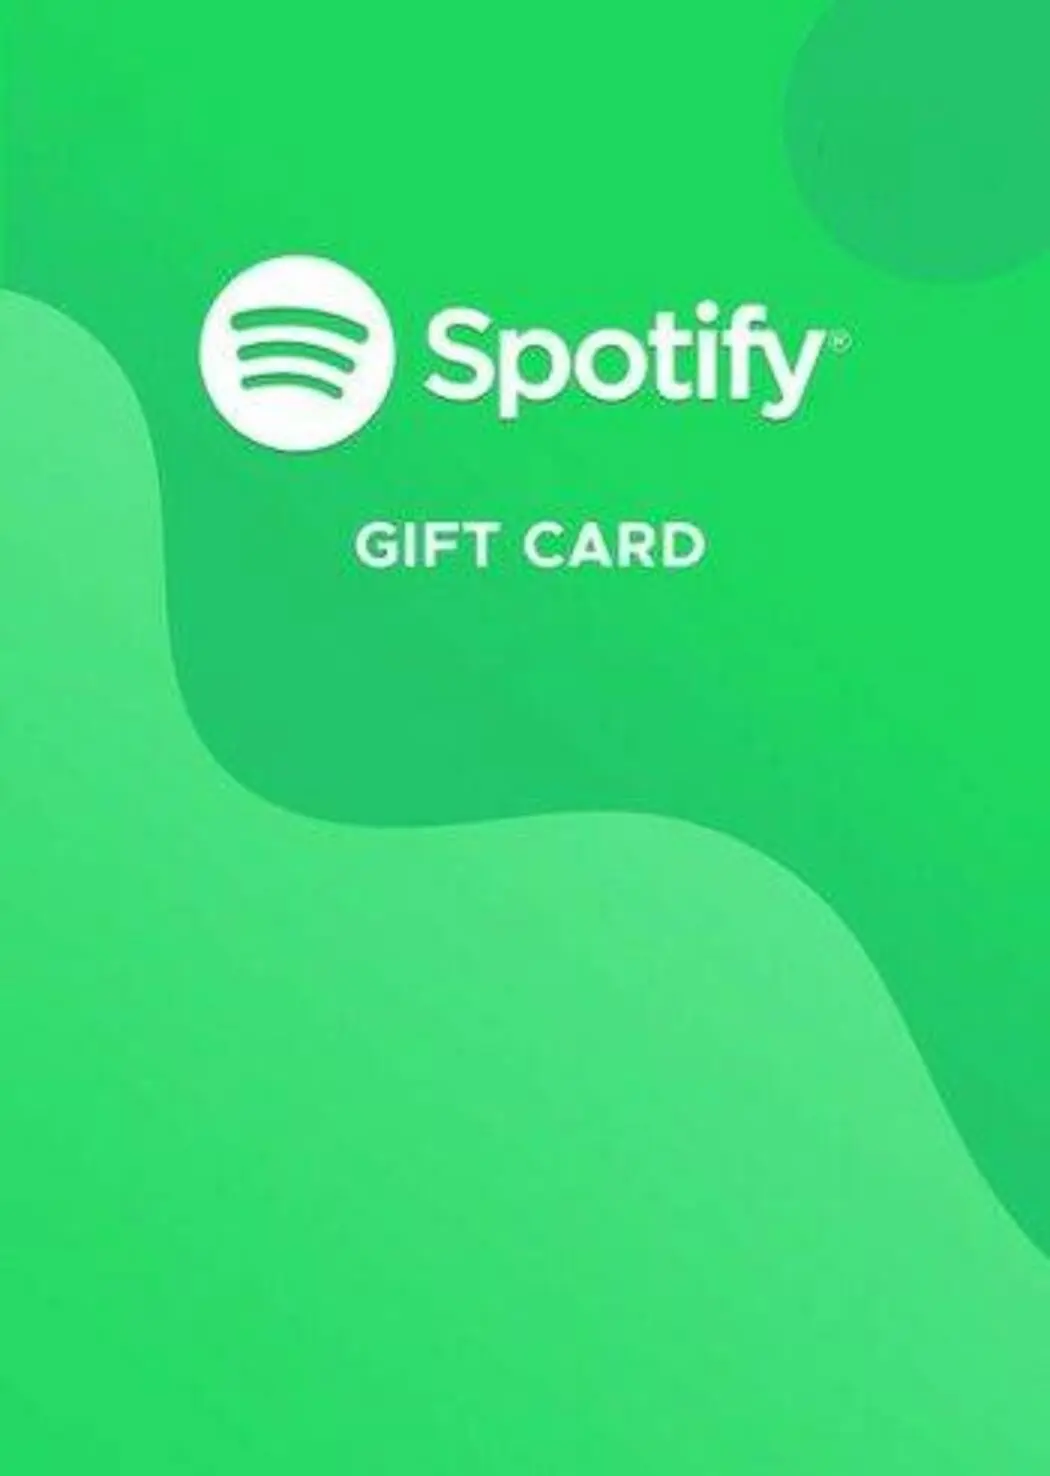 Spotify £10 GBP Gift Card (UK) - Digital Code